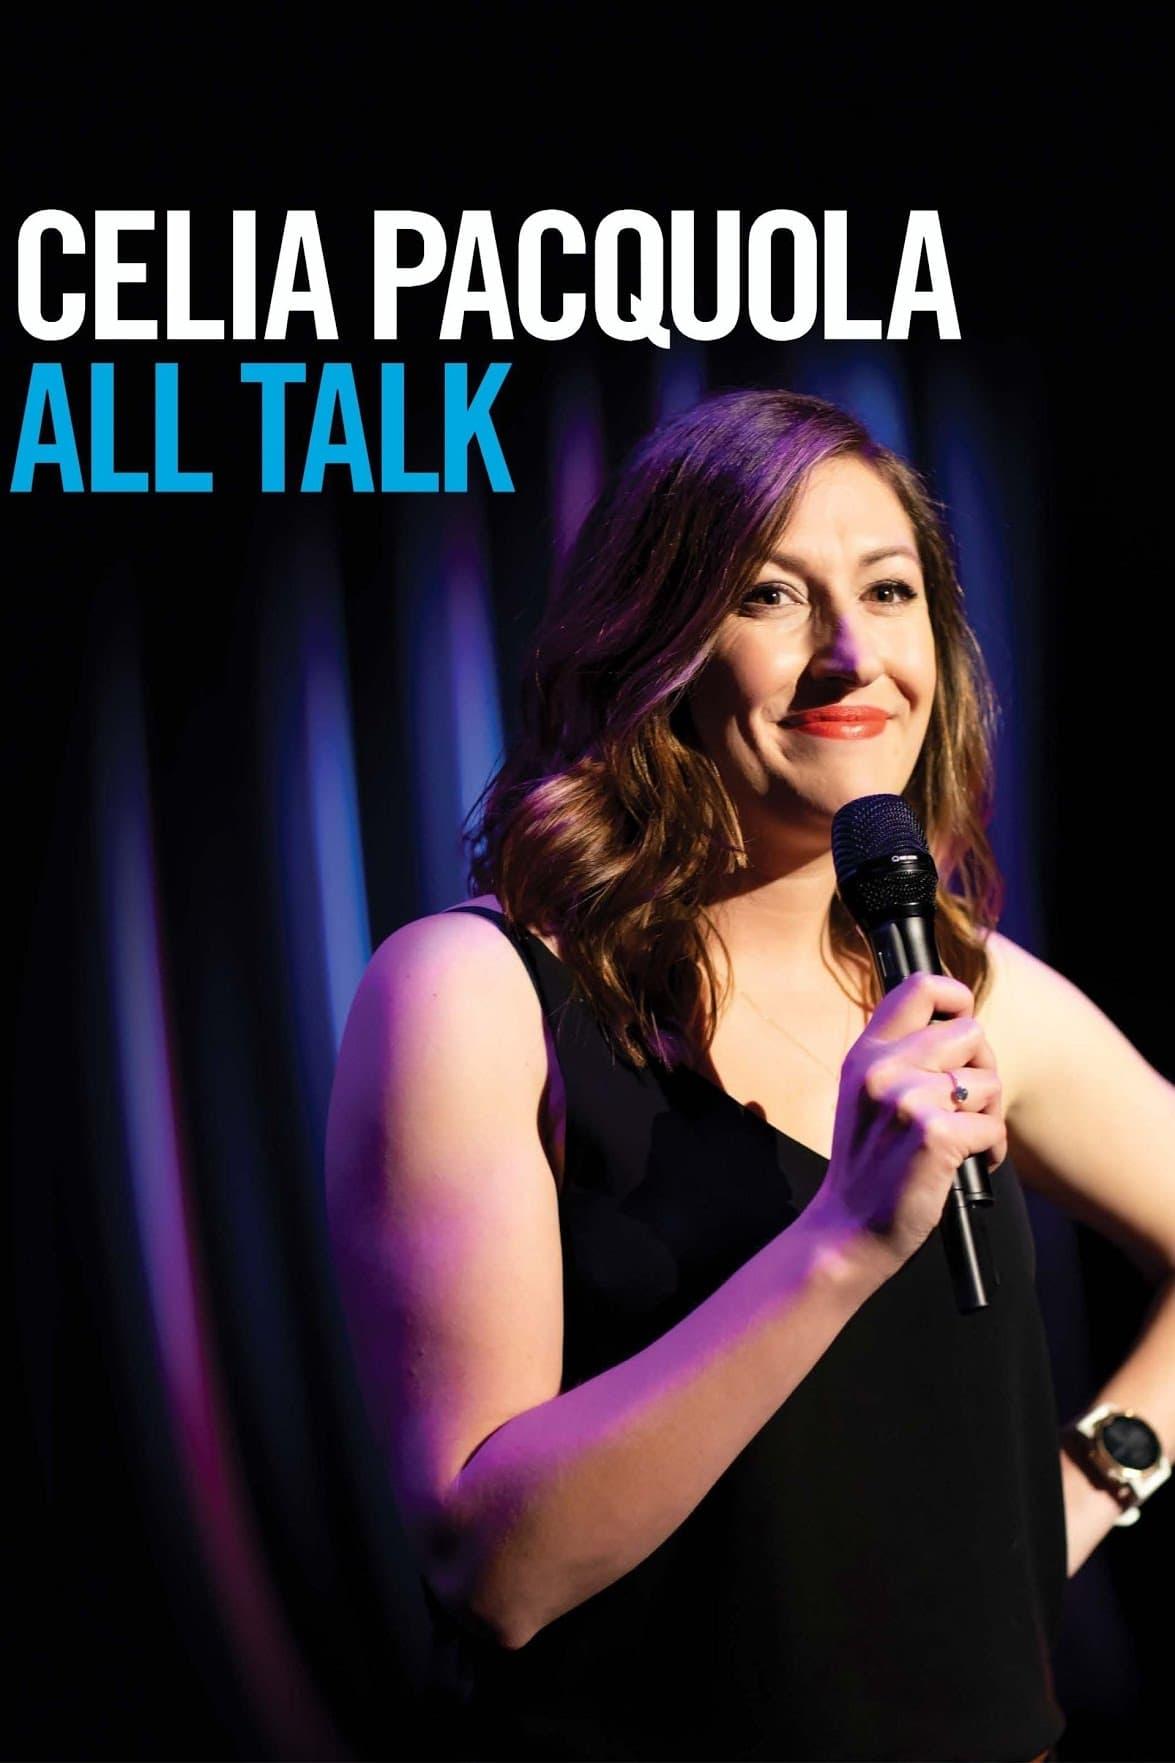 Celia Pacquola: All Talk poster